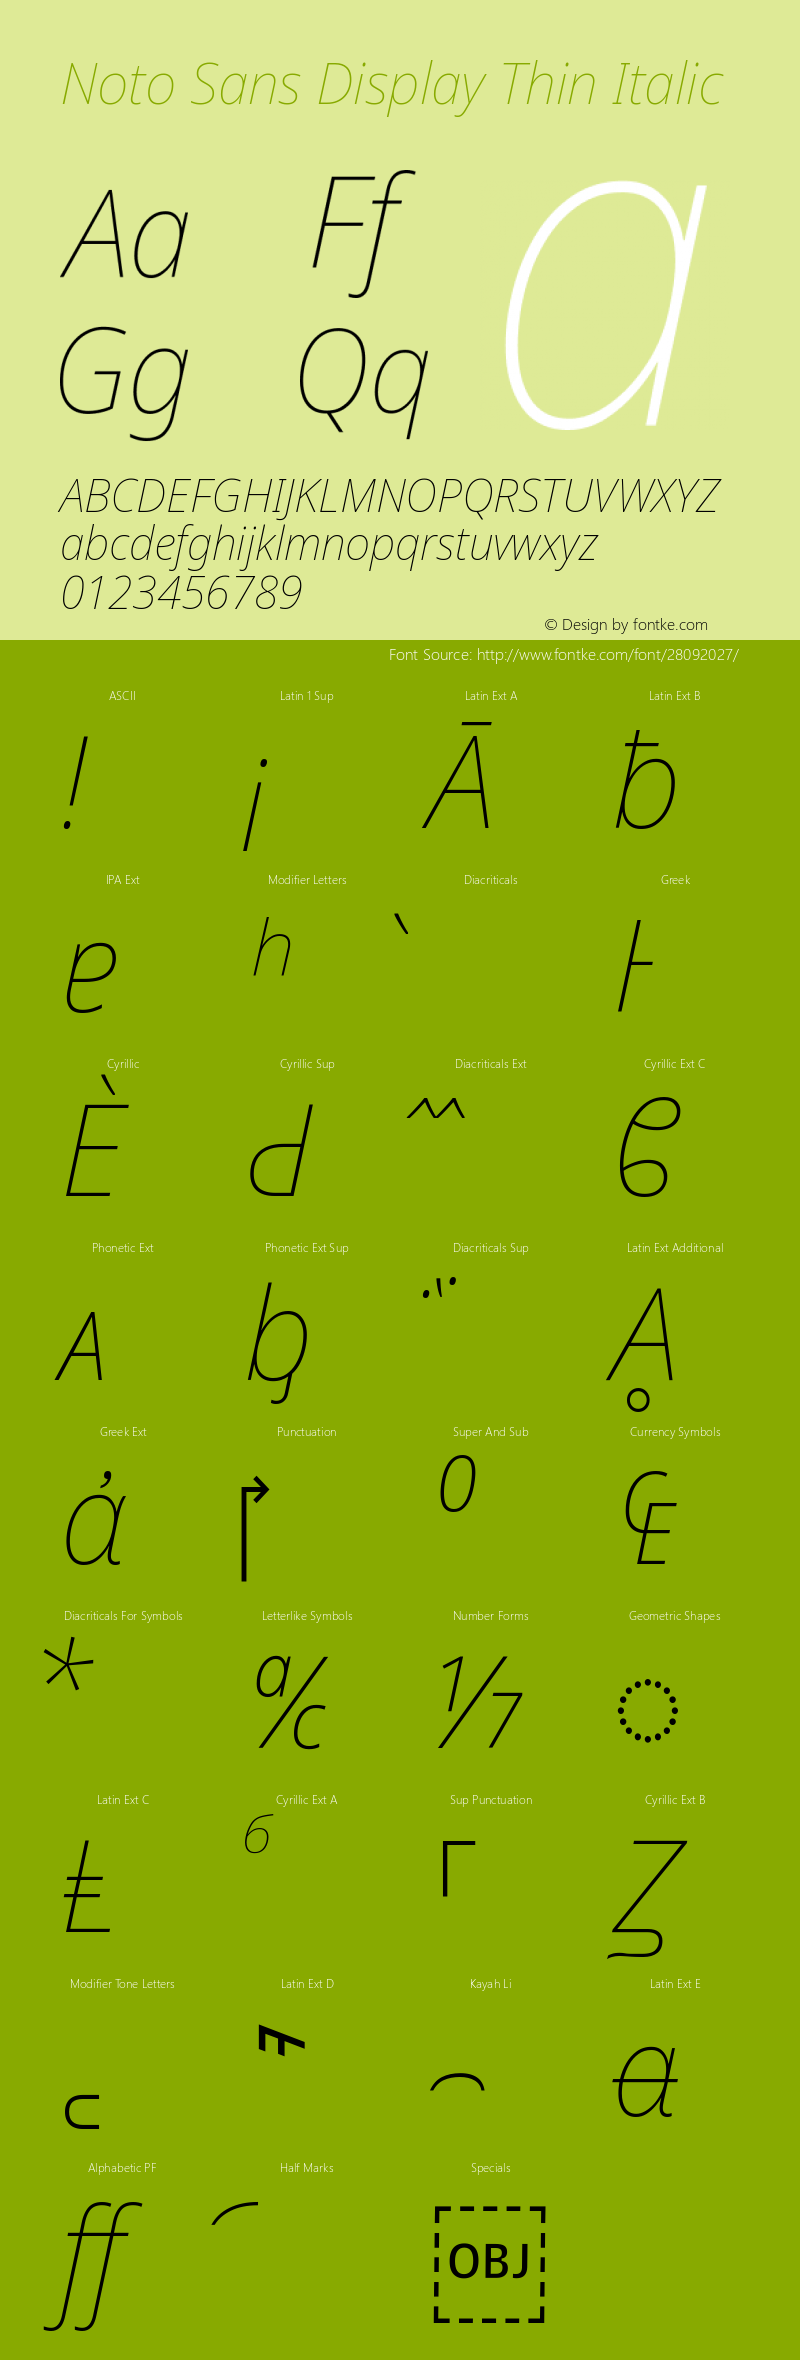 Noto Sans Display Thin Italic Version 2.001 Font Sample